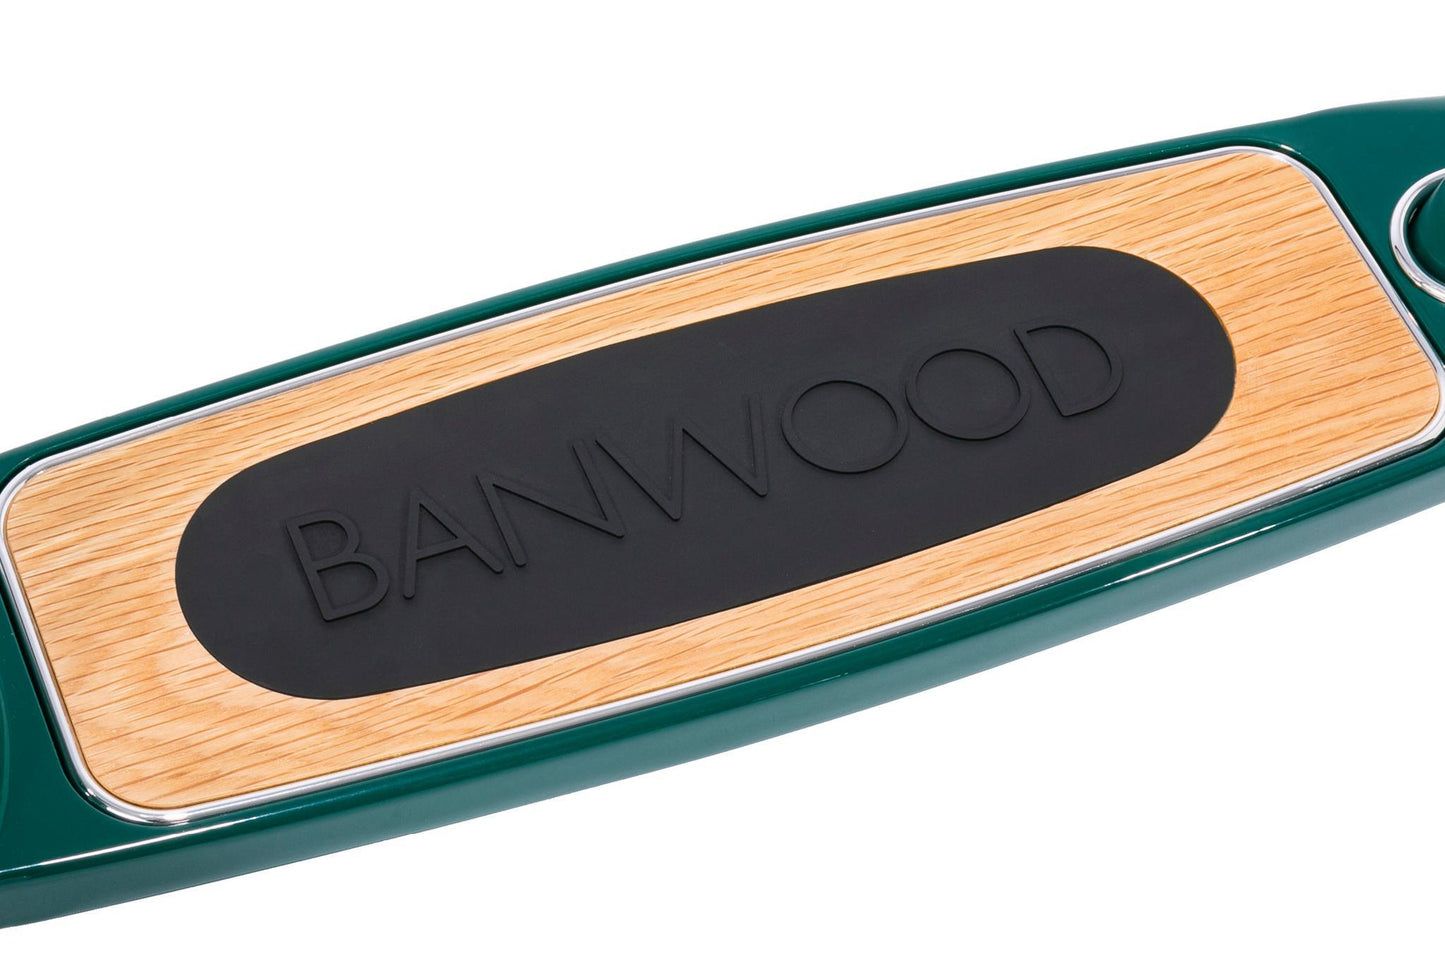 Trottinette vert - Banwood